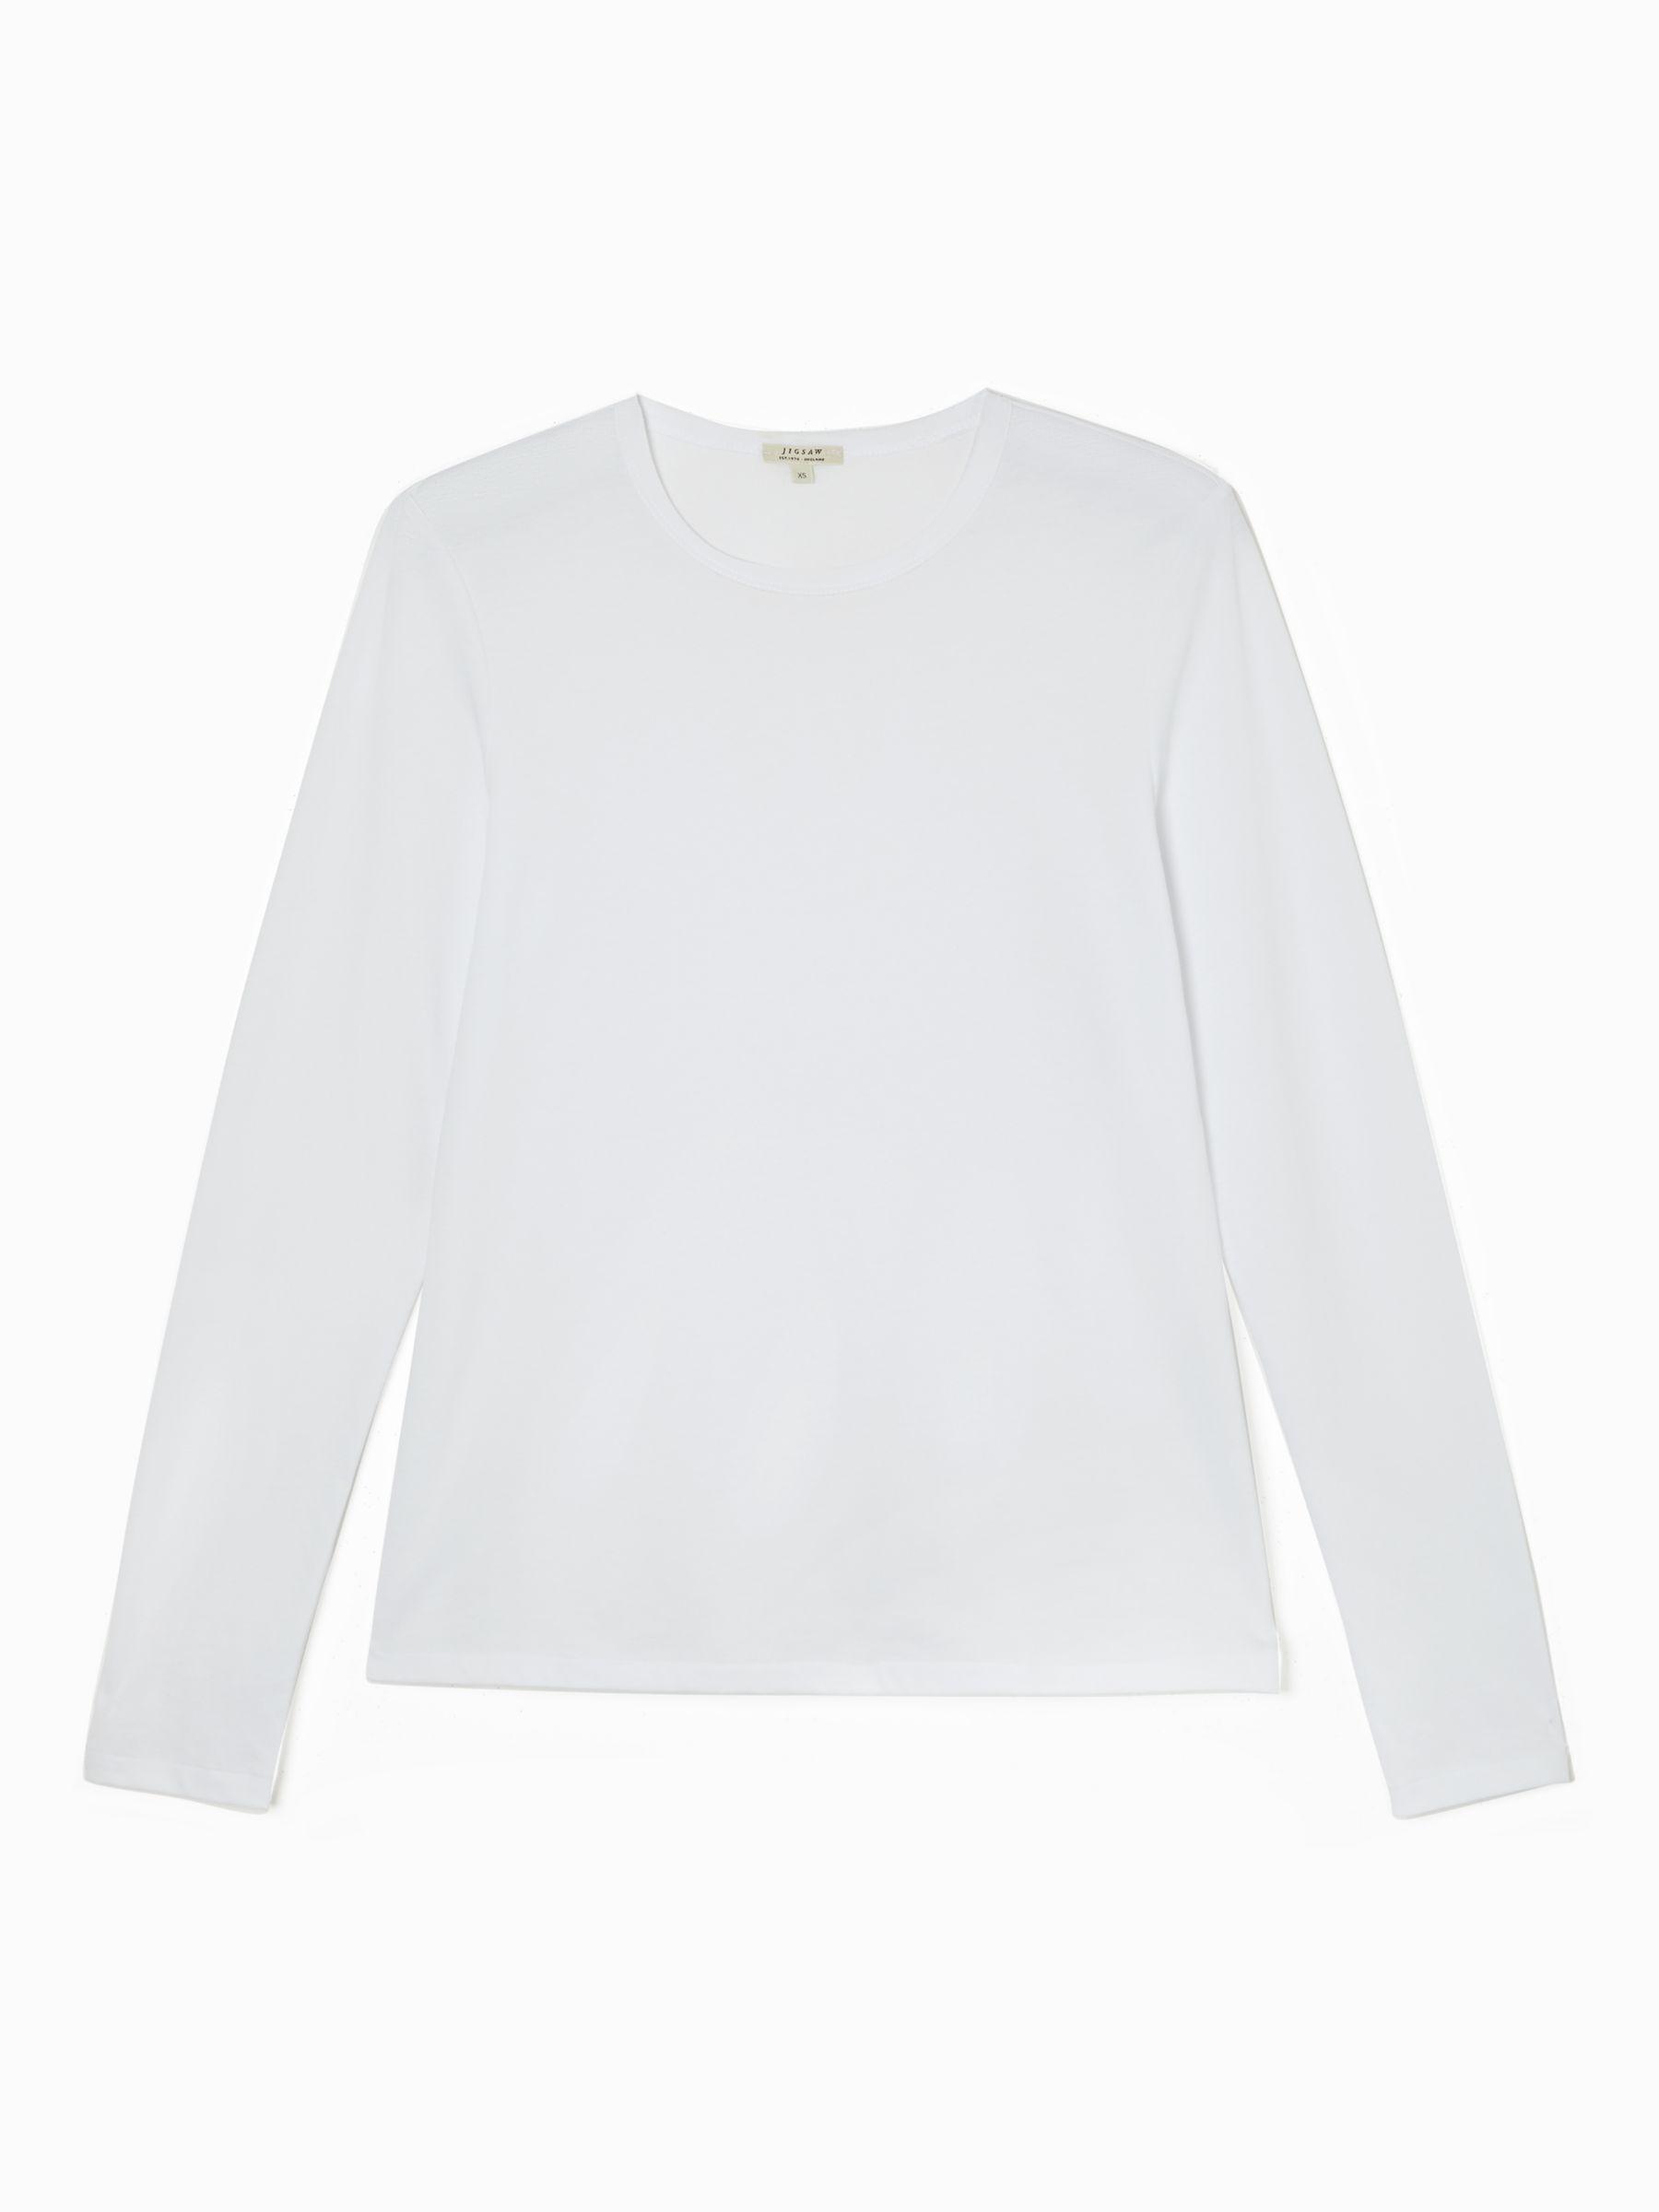 Jigsaw Supima Cotton Long Sleeve T-shirt in White | Lyst UK